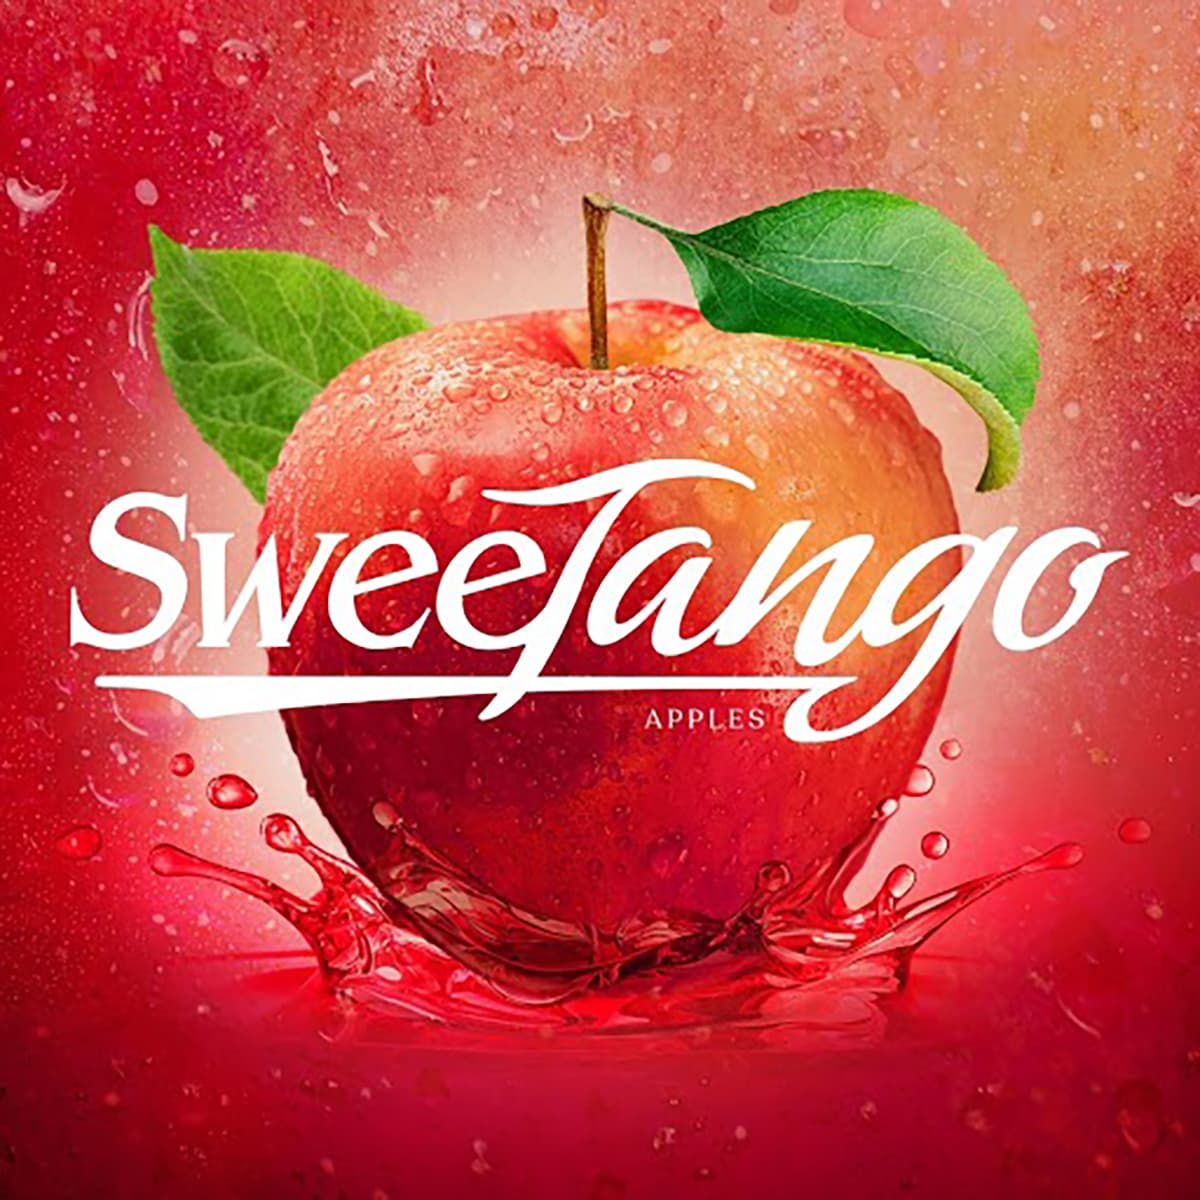 https://sweetango.com/wp-content/uploads/2020/12/sweetango-apple-logo.jpg